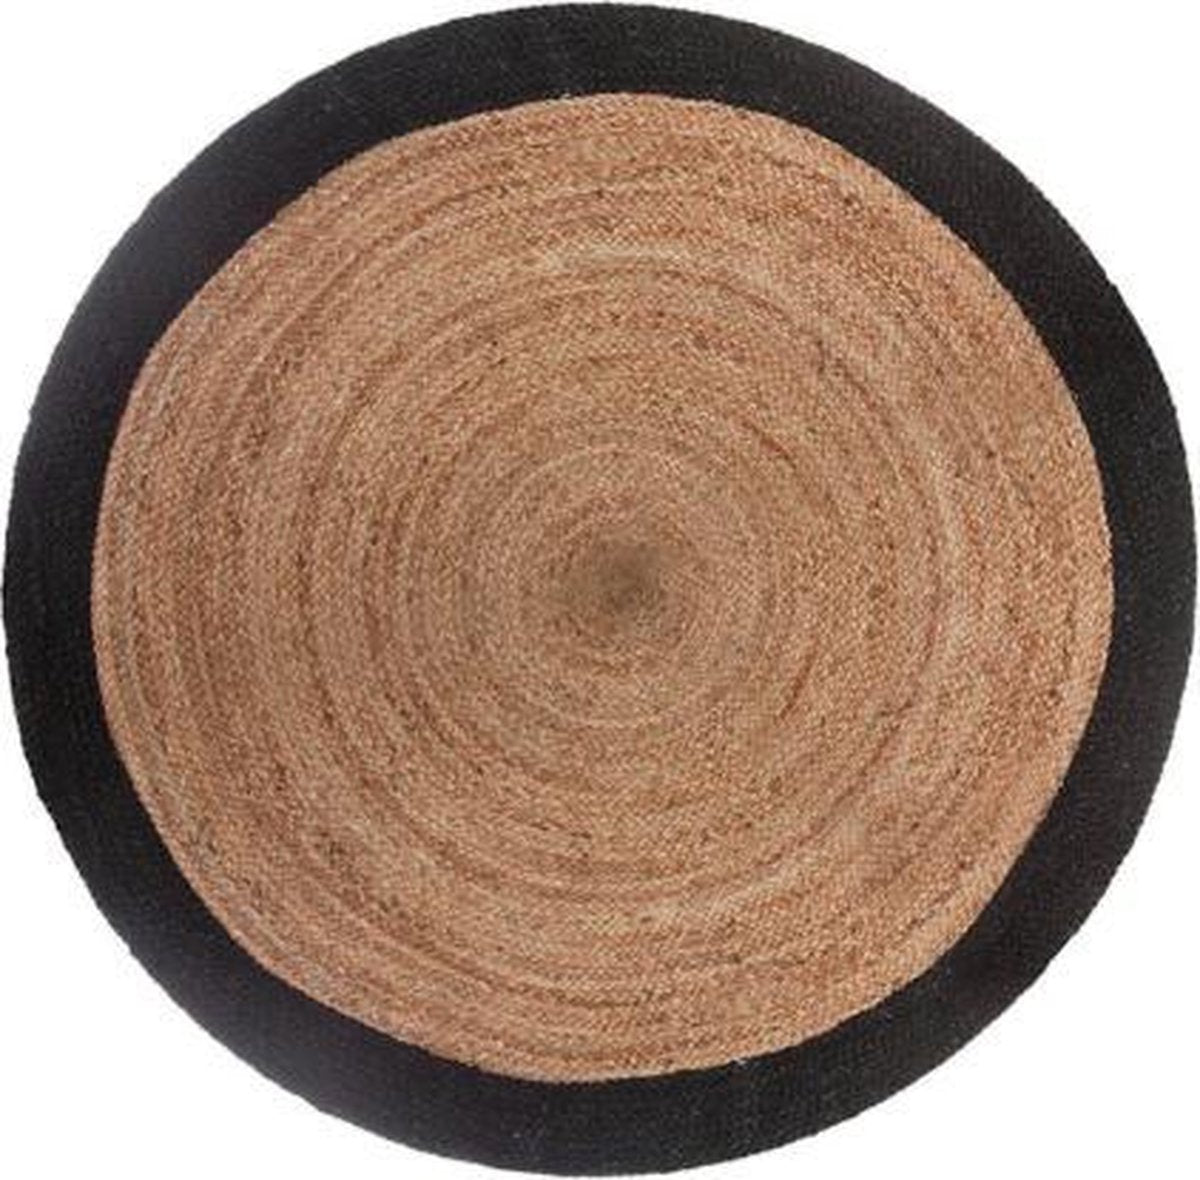 Atmosphera Jute rug round with natural color with black edge, diameter 120 cm